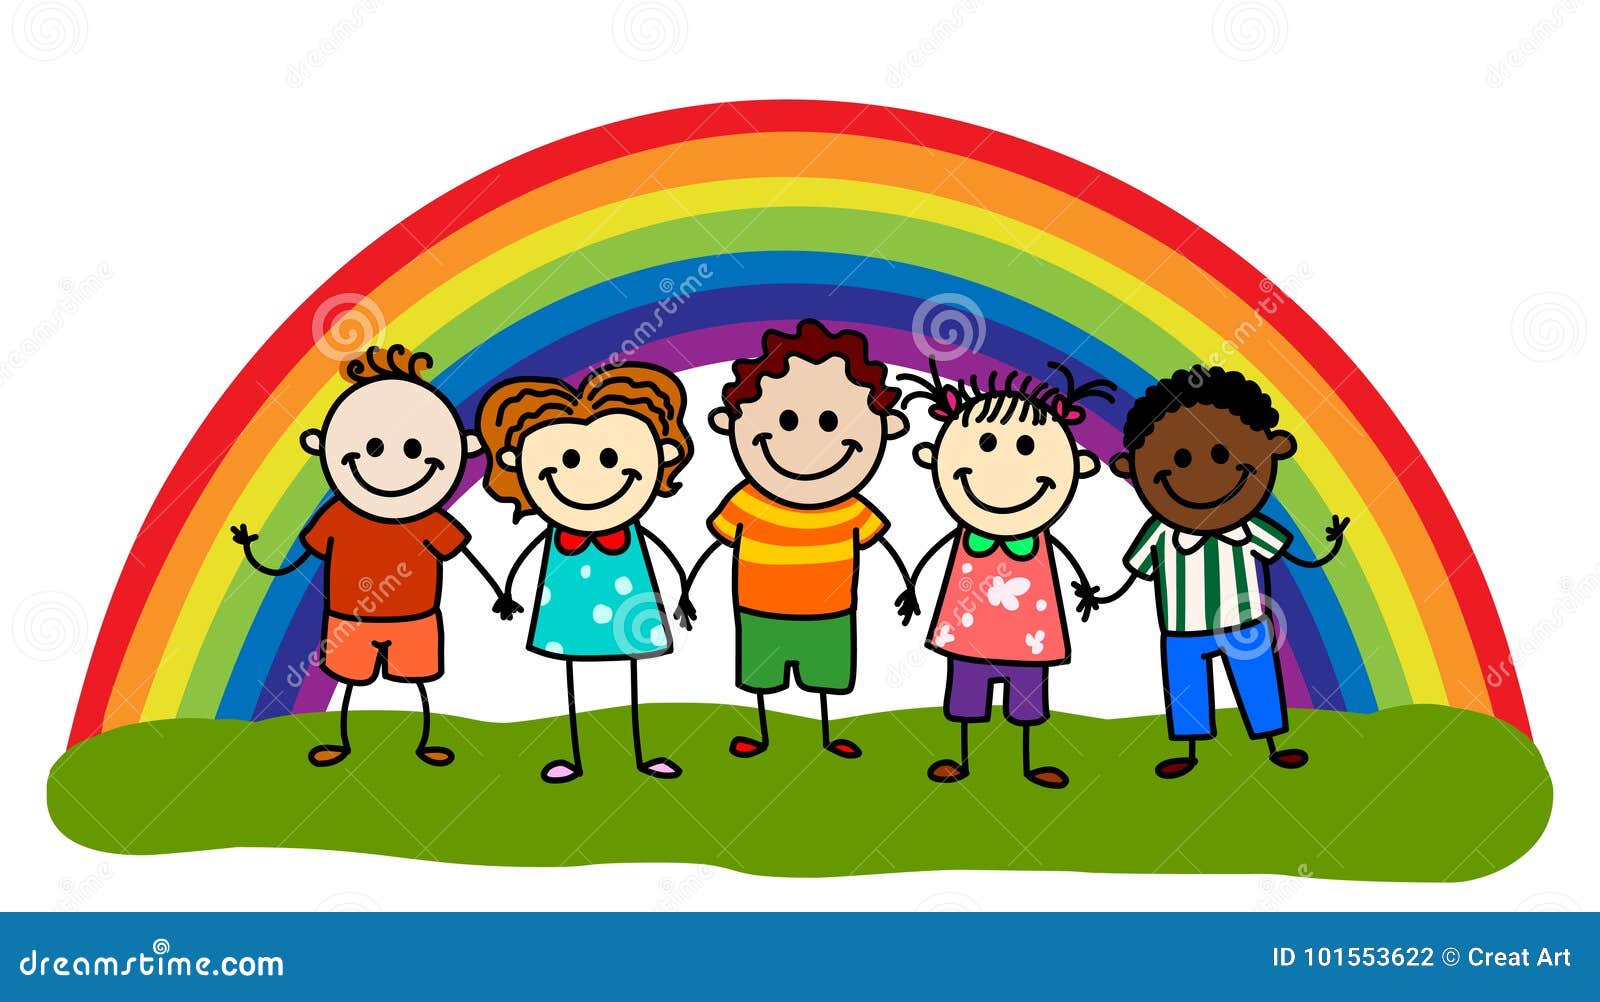 rainbow kids